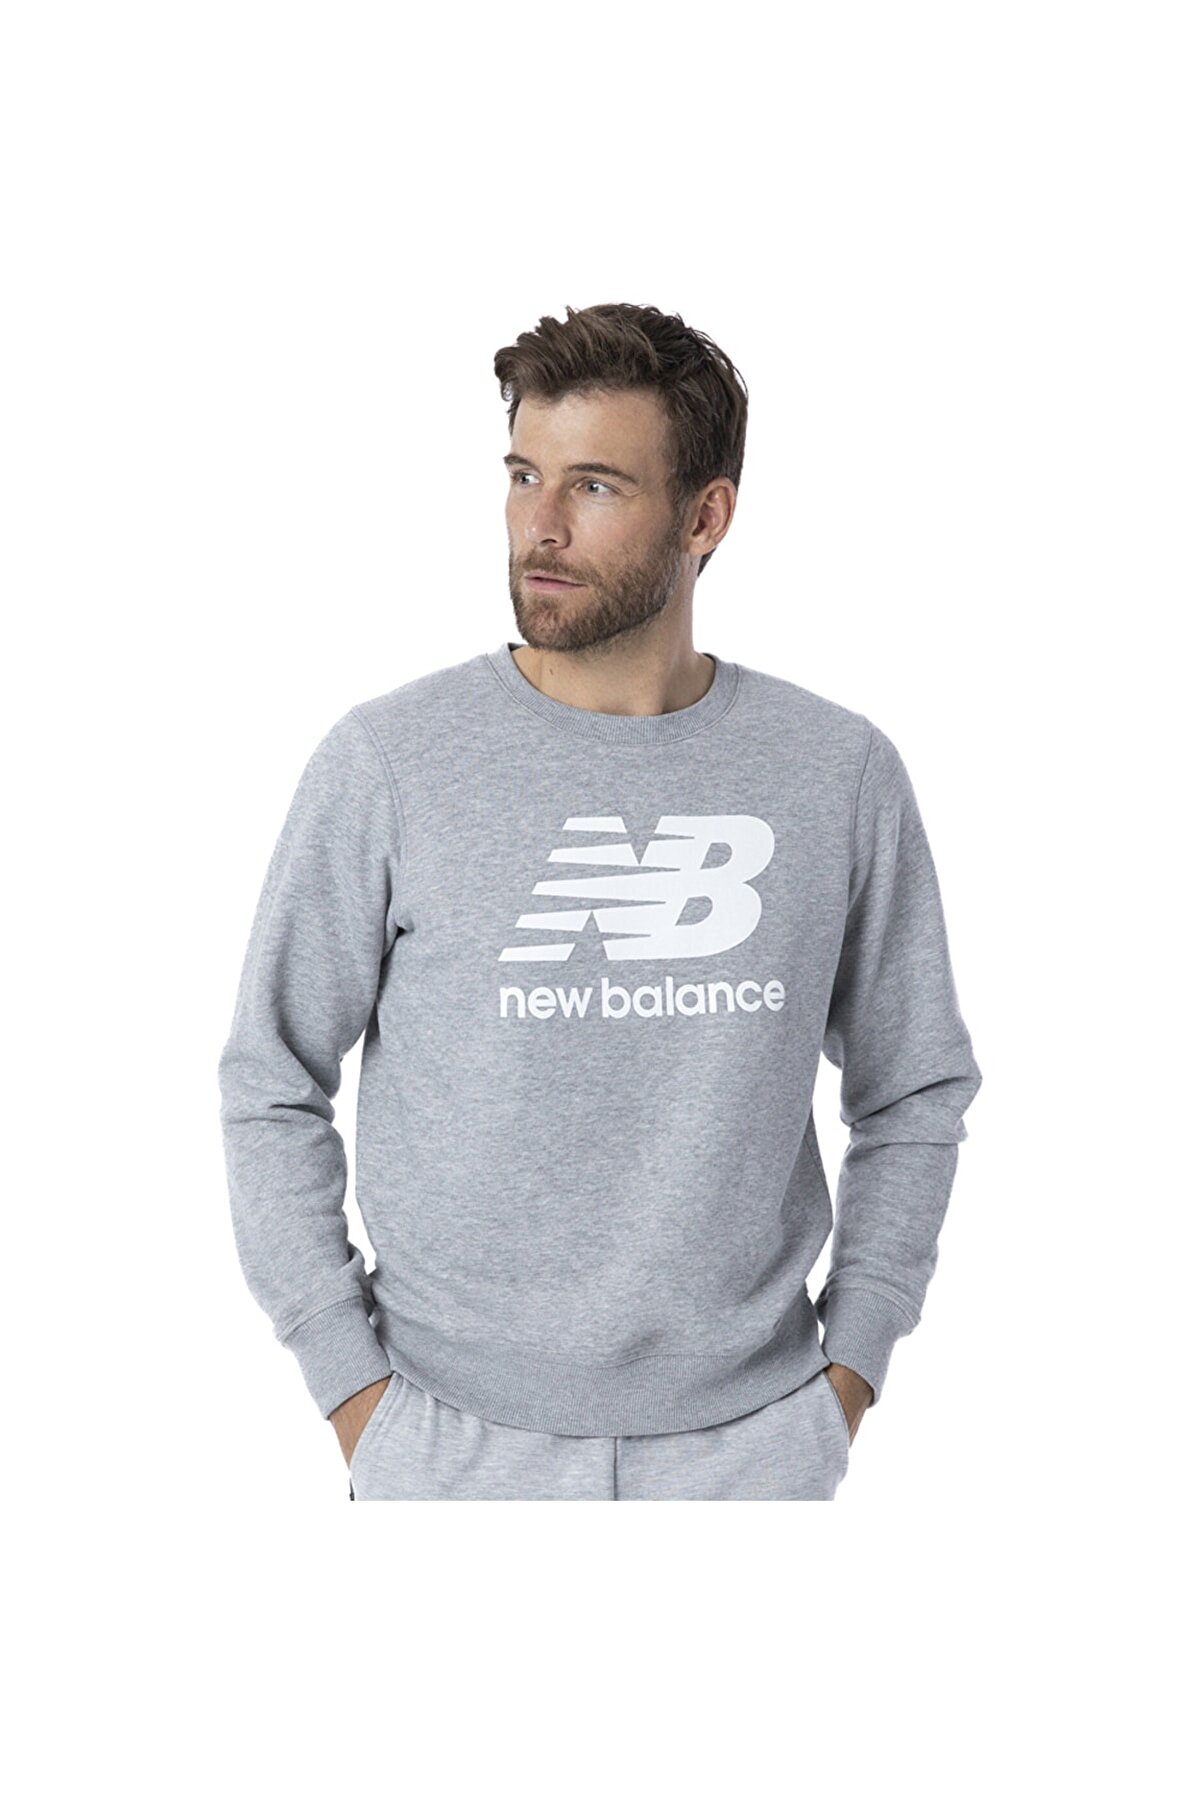 New Balance Lifestyle Gri Erkek Sweatshirt Mtc1105-gry